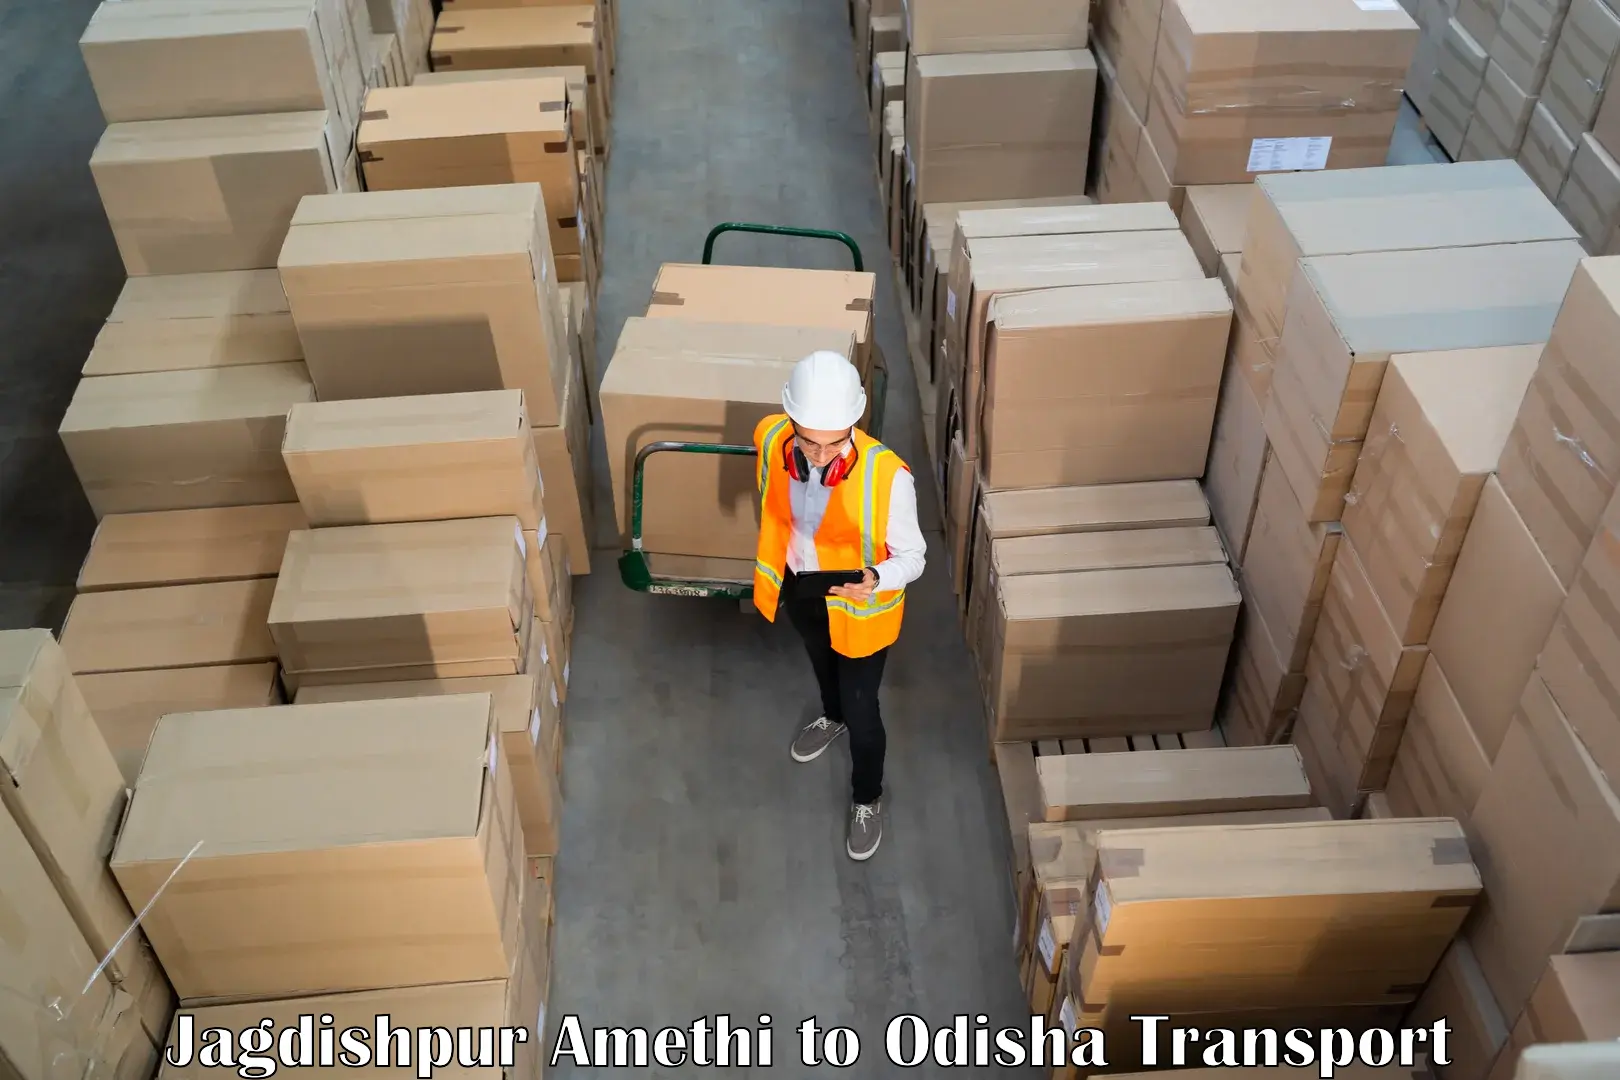 Truck transport companies in India Jagdishpur Amethi to Loisingha